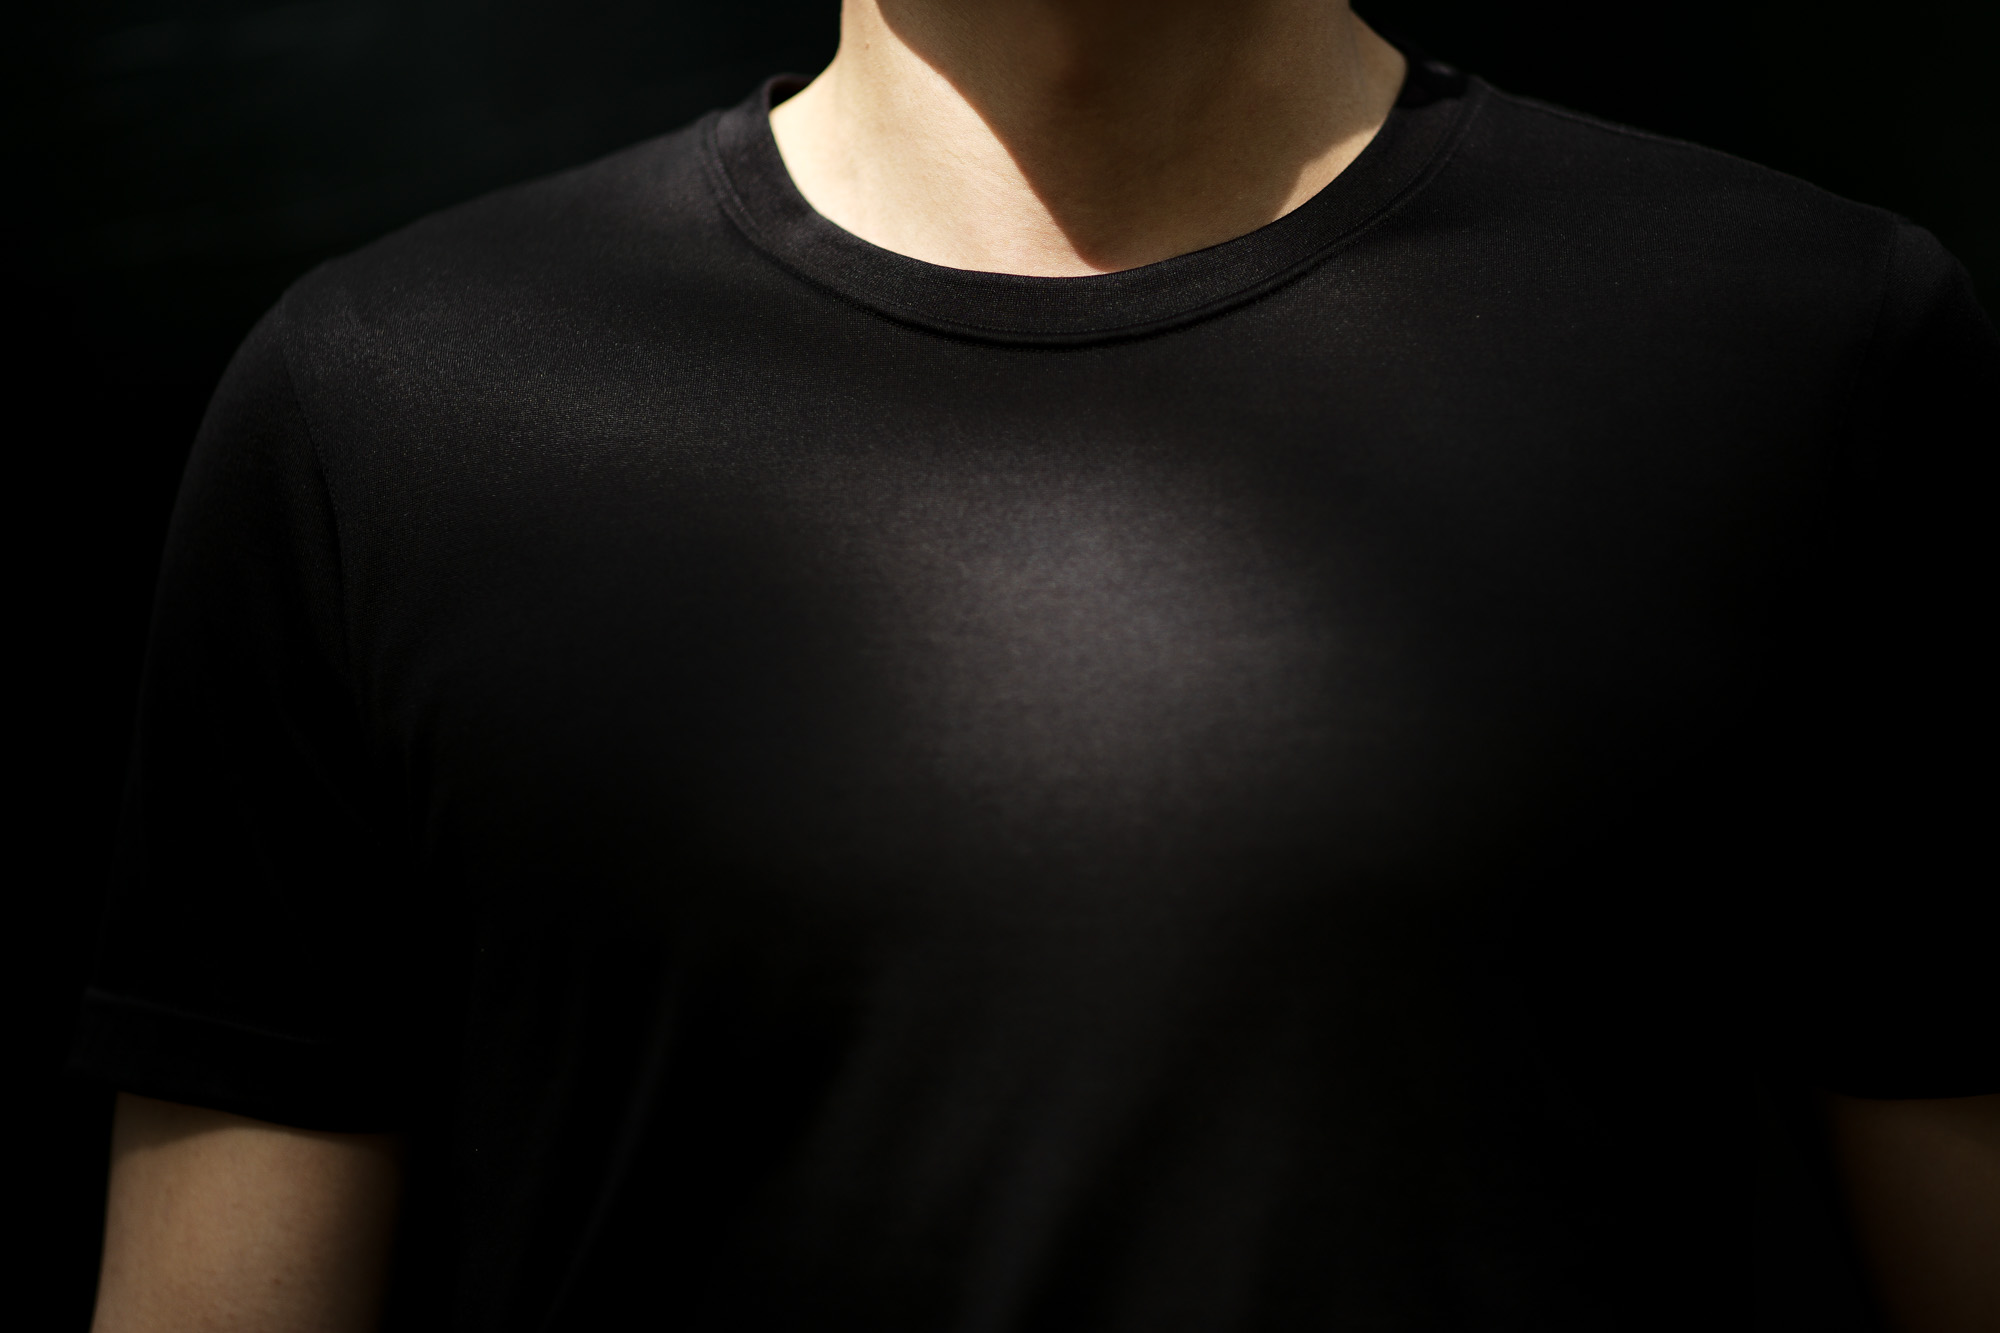 Gran Sasso (グランサッソ) Silk T-shirt (シルク Tシャツ) SETA (シルク 100%) ショートスリーブ シルク Tシャツ BLACK (ブラック・303) made in italy (イタリア製) 2020 春夏新作    愛知 名古屋 altoediritto アルトエデリット